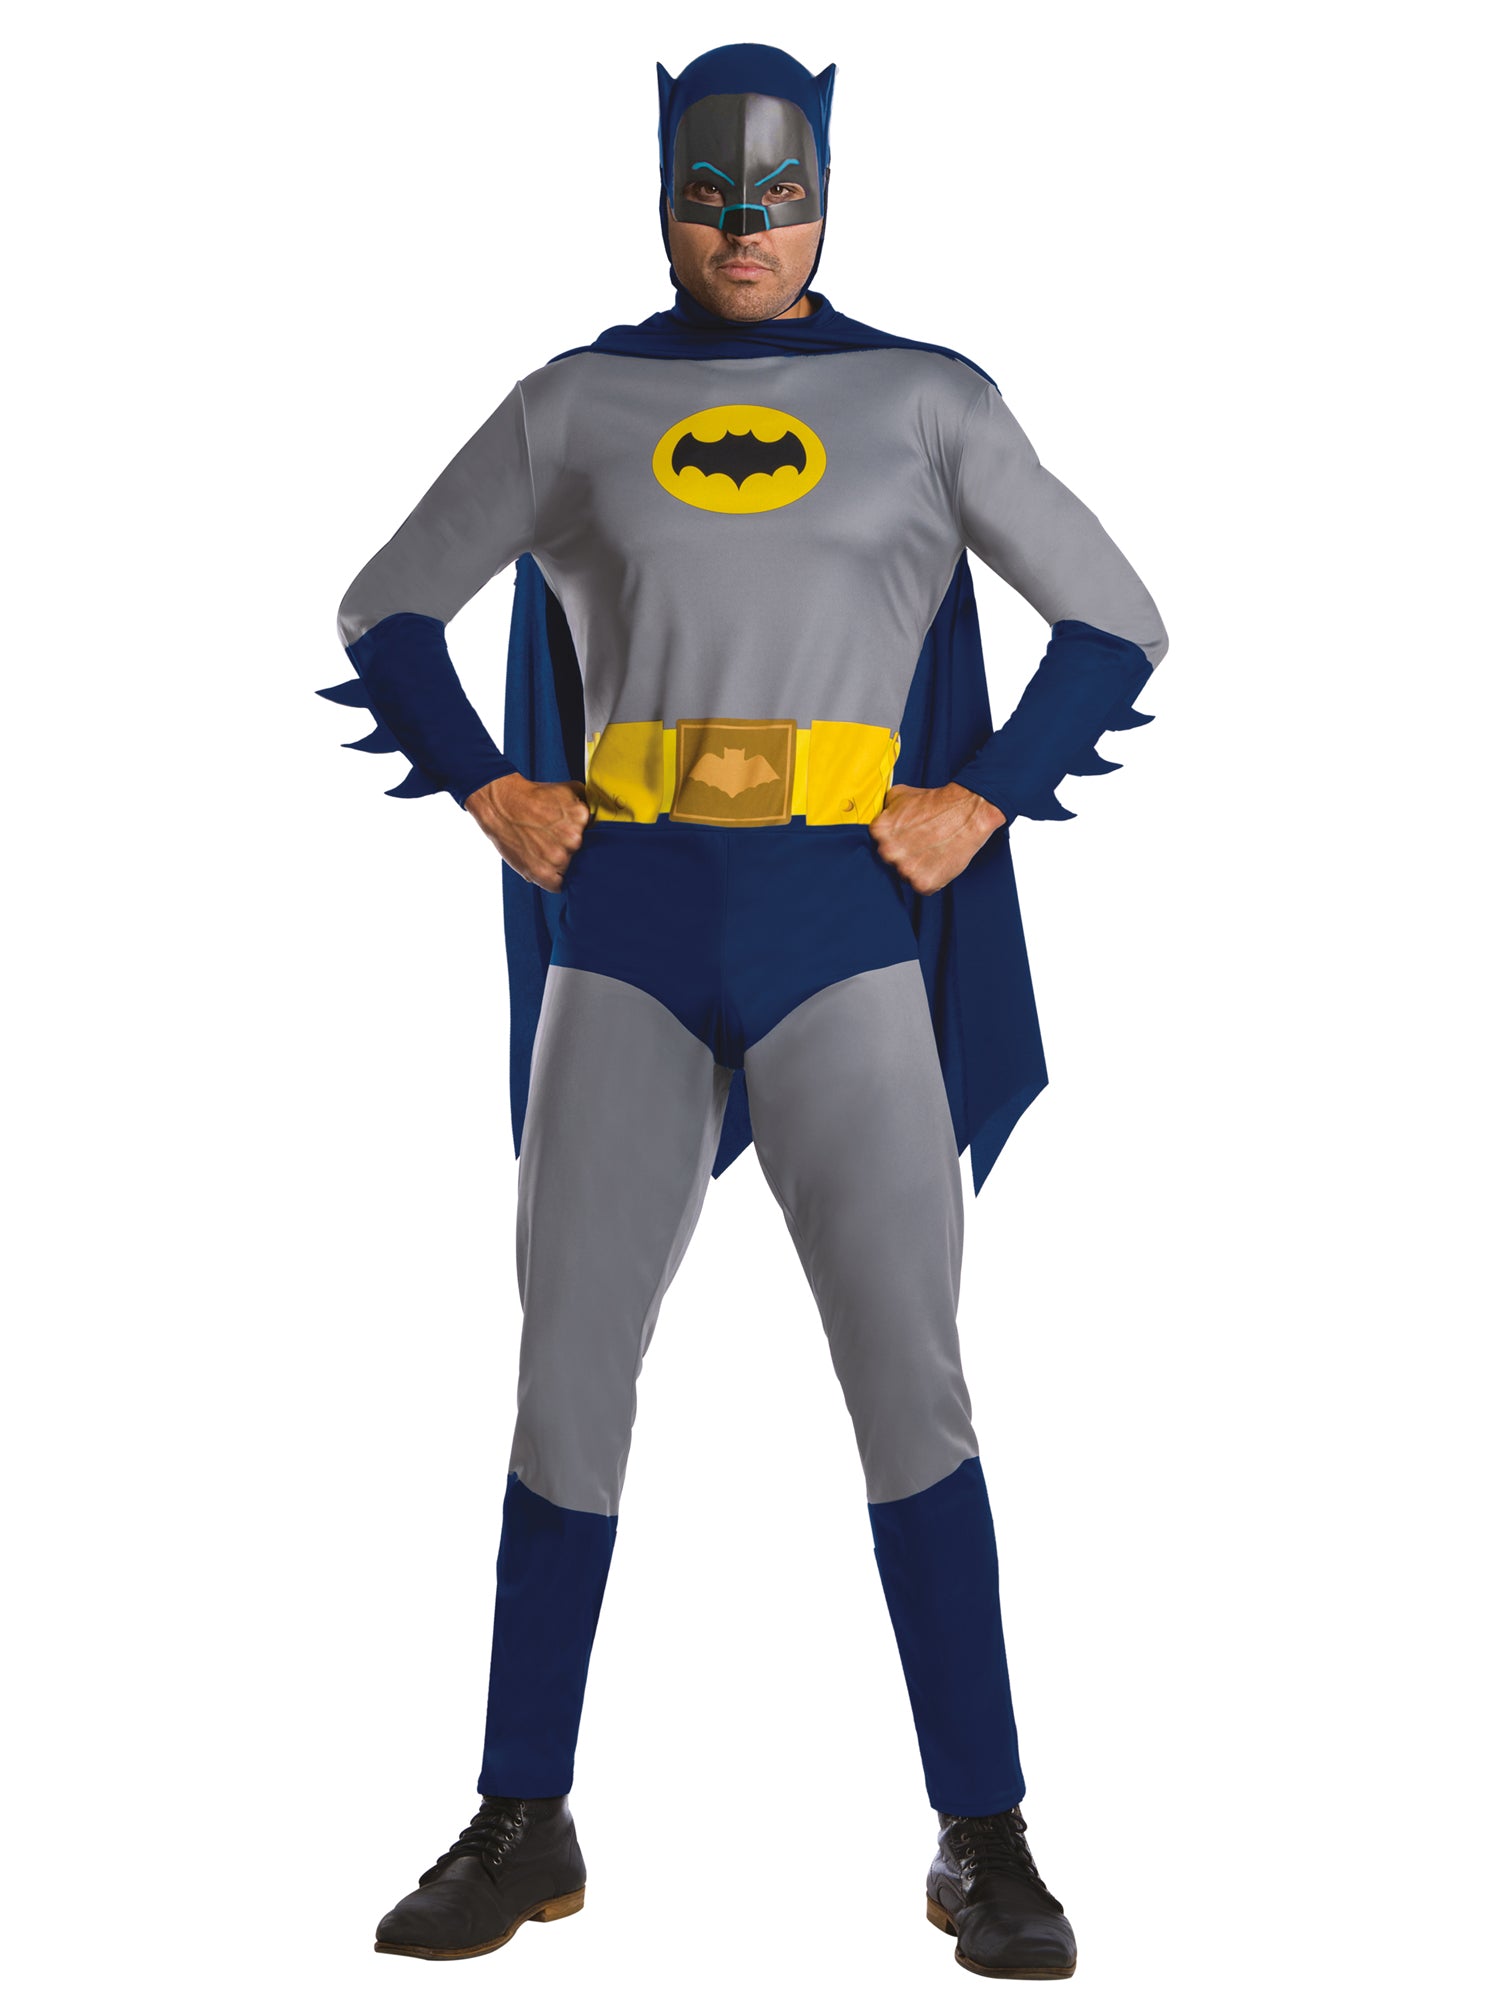 Batman, 1966 Batman, Multi, DC, Adult Costume, Extra Large, Front